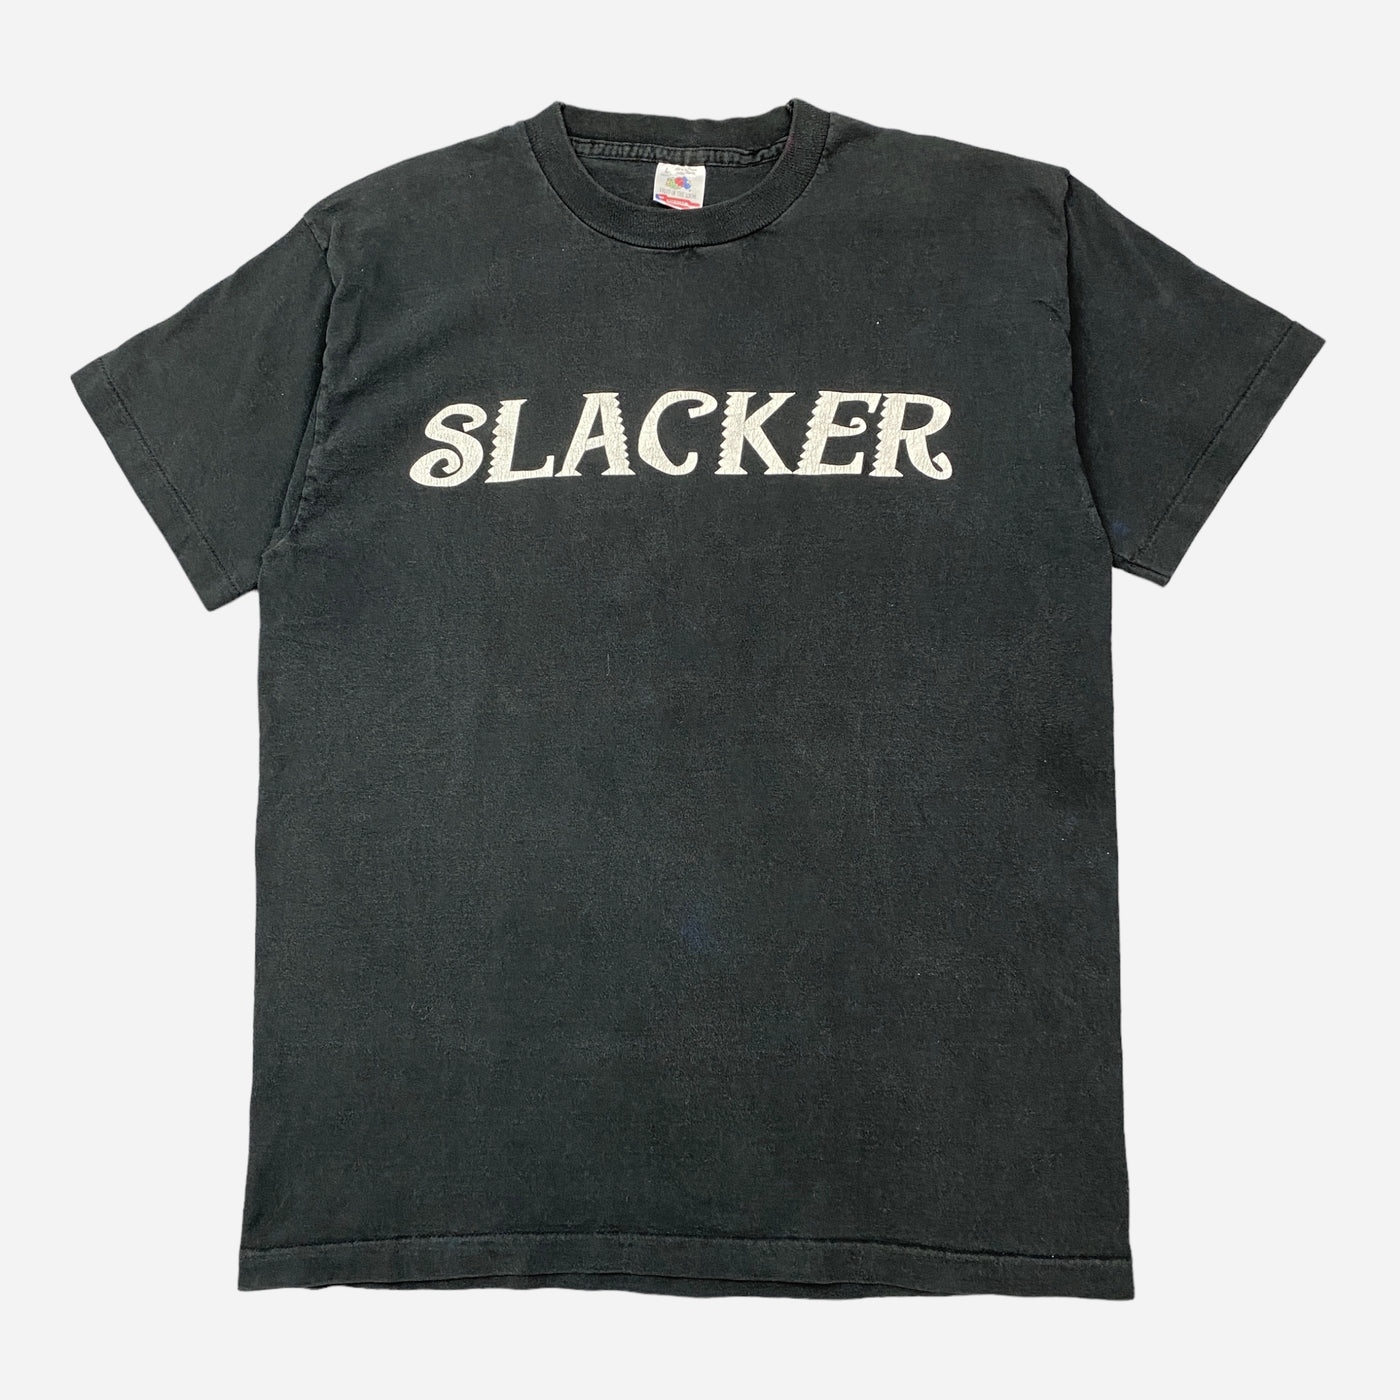 1993 SLACKER T-SHIRT